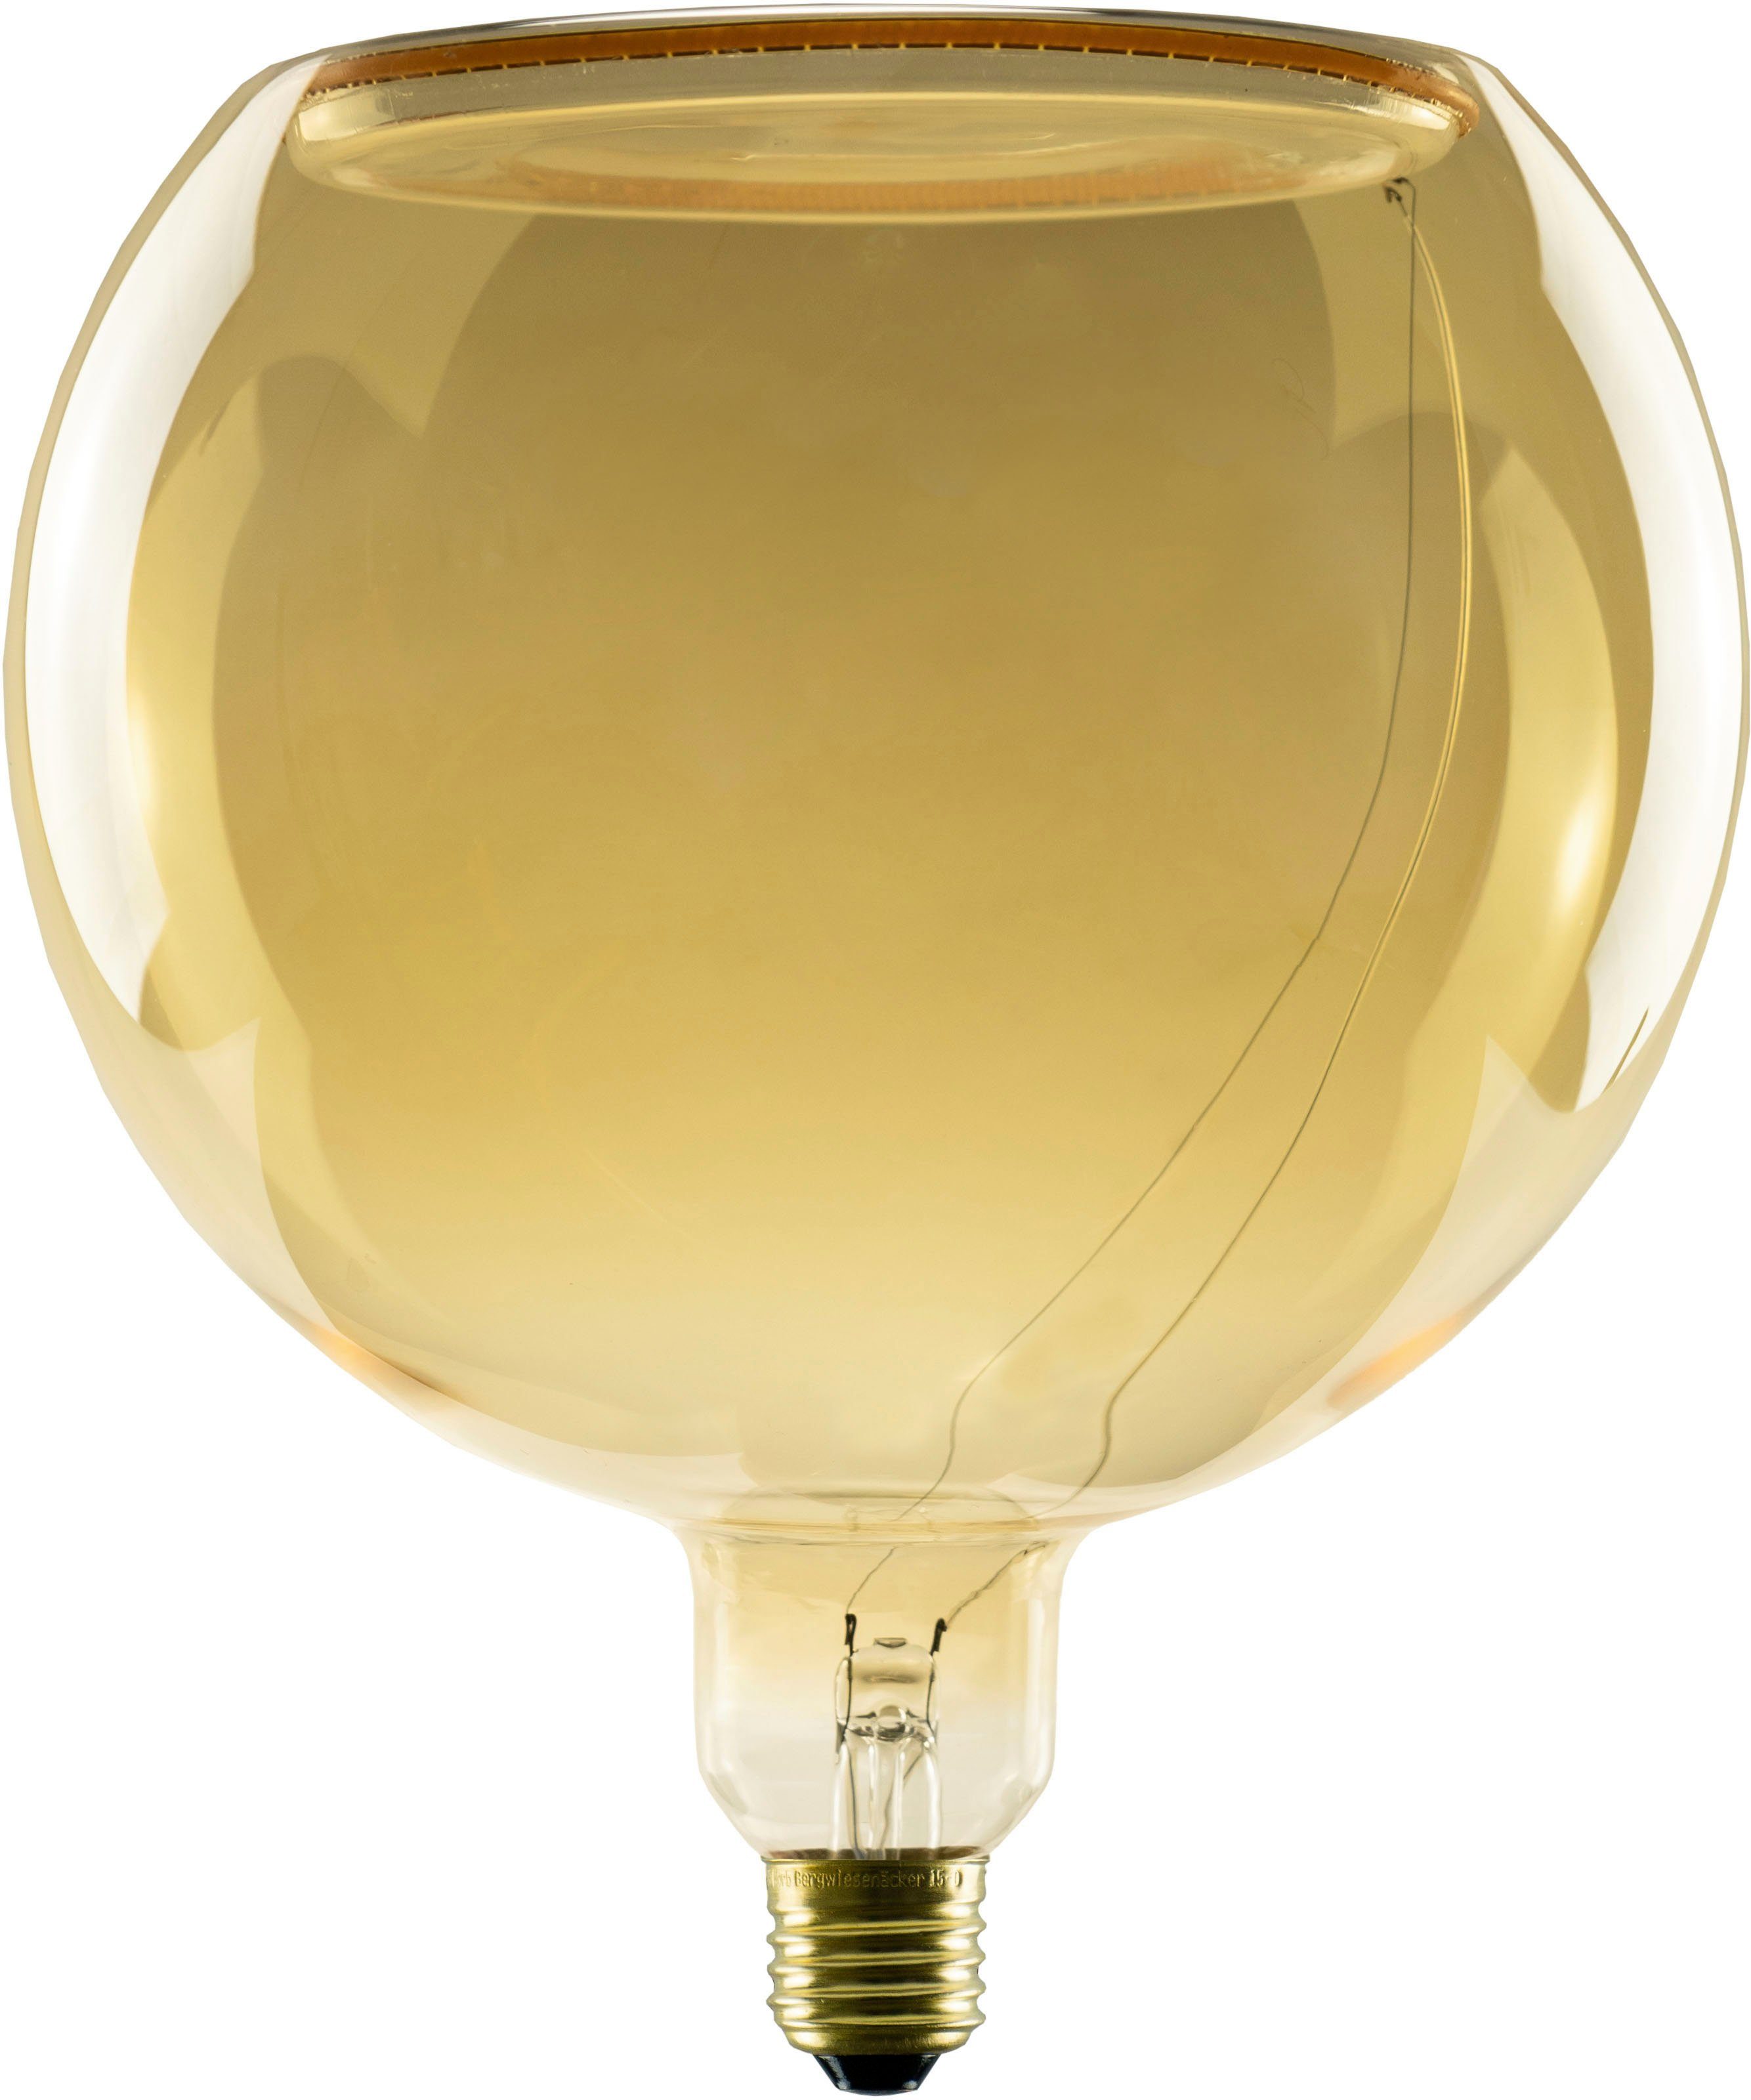 SEGULA LED-Leuchtmittel LED Floating Globe 200 gold, E27, 1 St., Extra-Warmweiß, LED Floating Globe 200 gold, E27, 4,5W, CRI 90, dimmbar, Aussenbereich